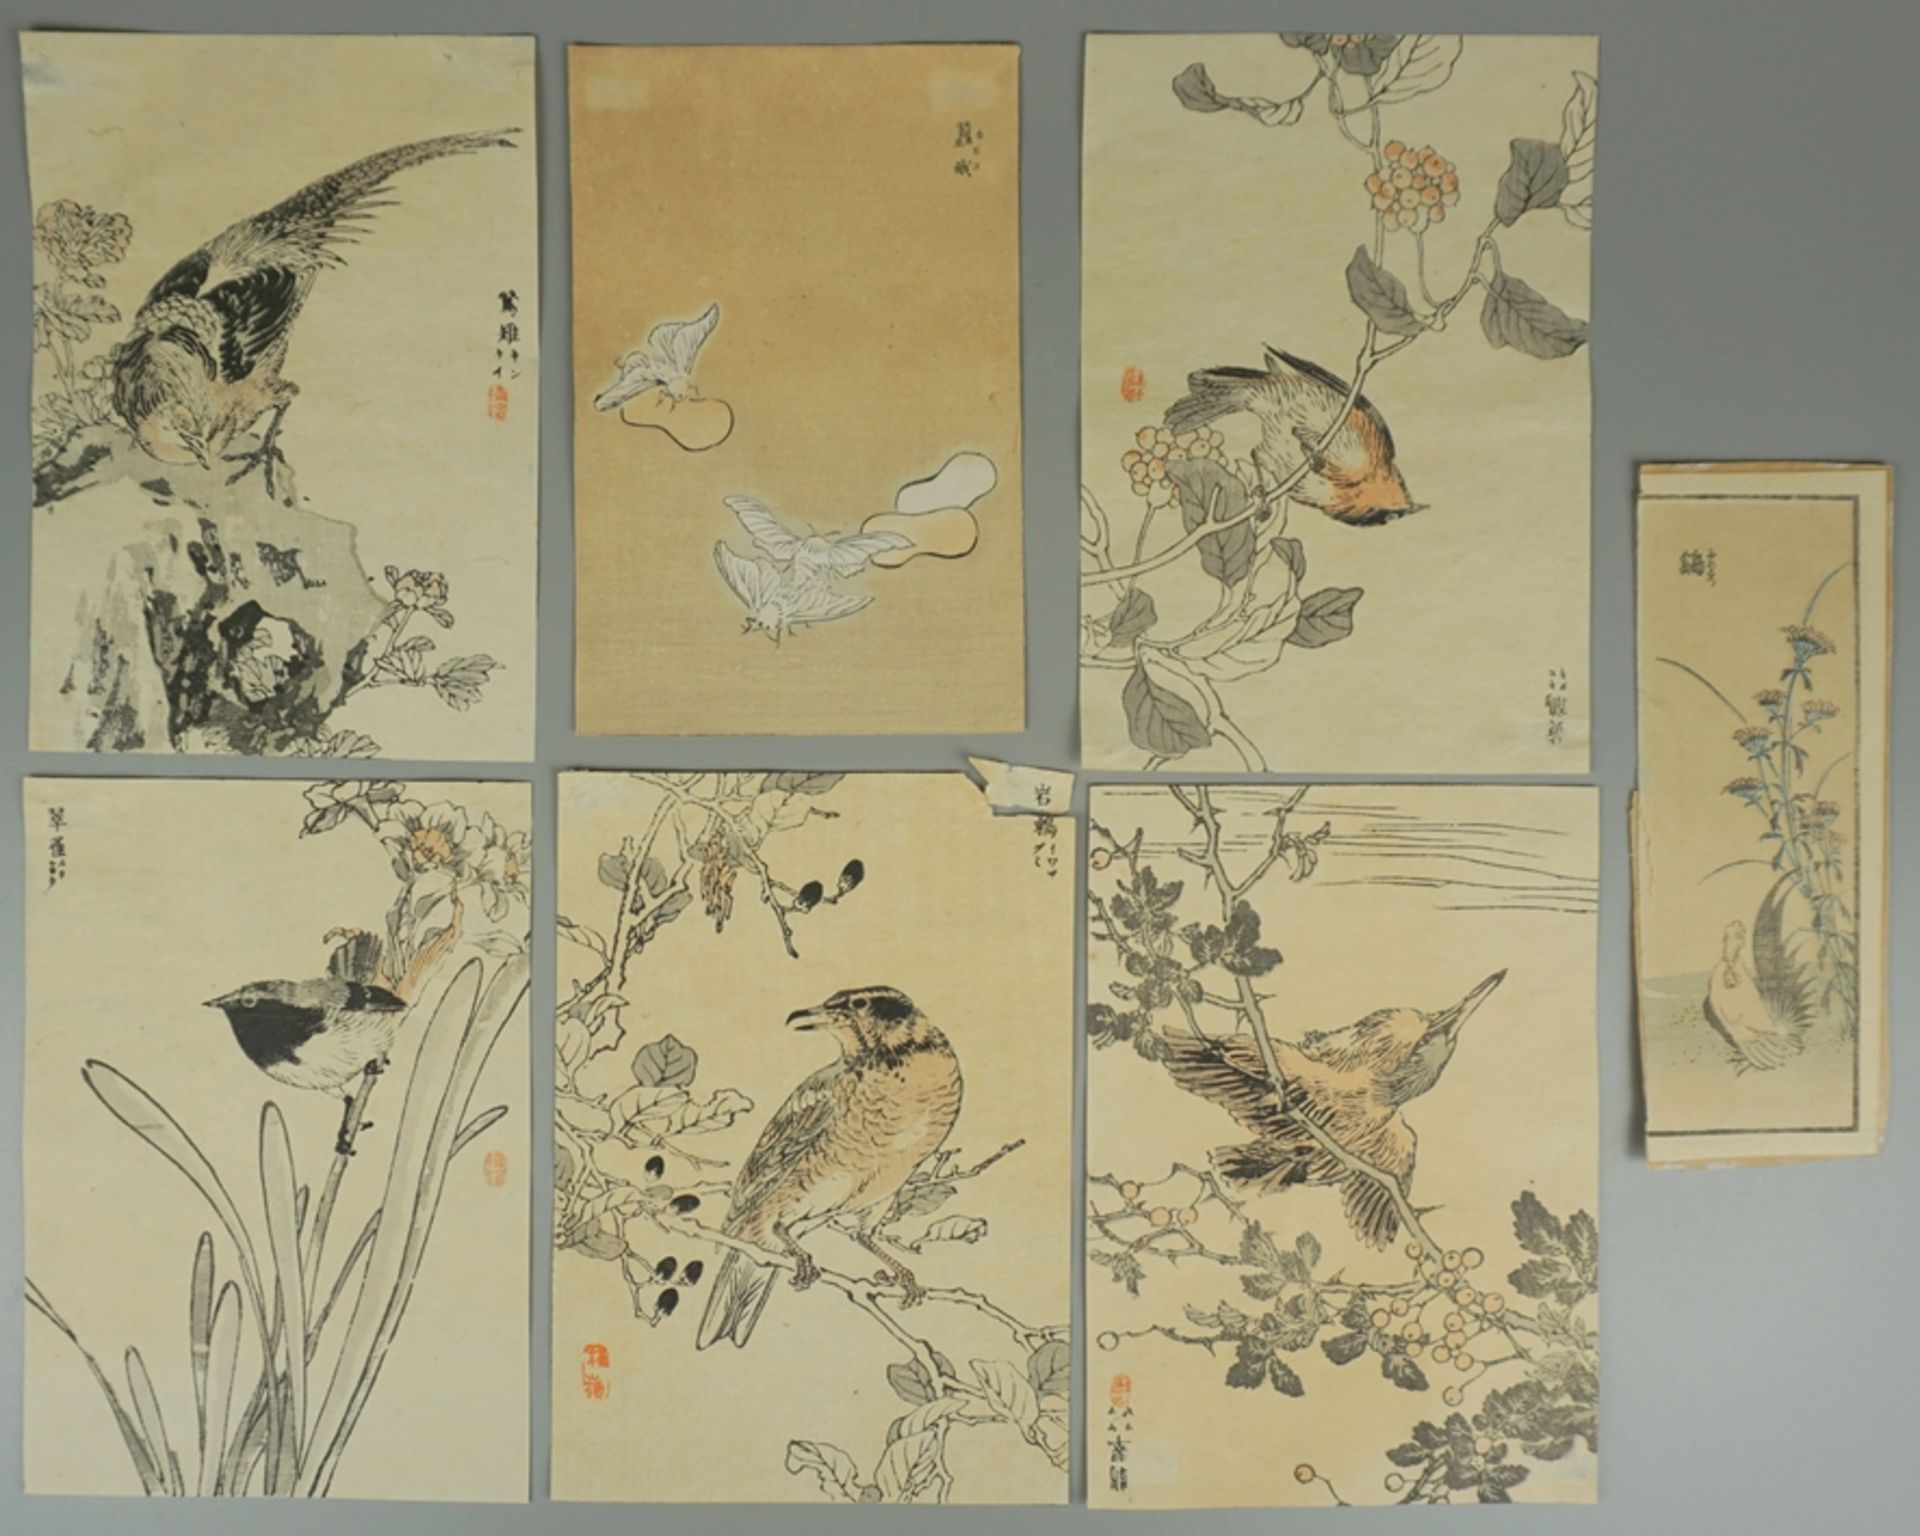 wohl Kōno Bairei (1844-1895, JPN), 7 japan. Farbholzschnitte, 19. Jh.